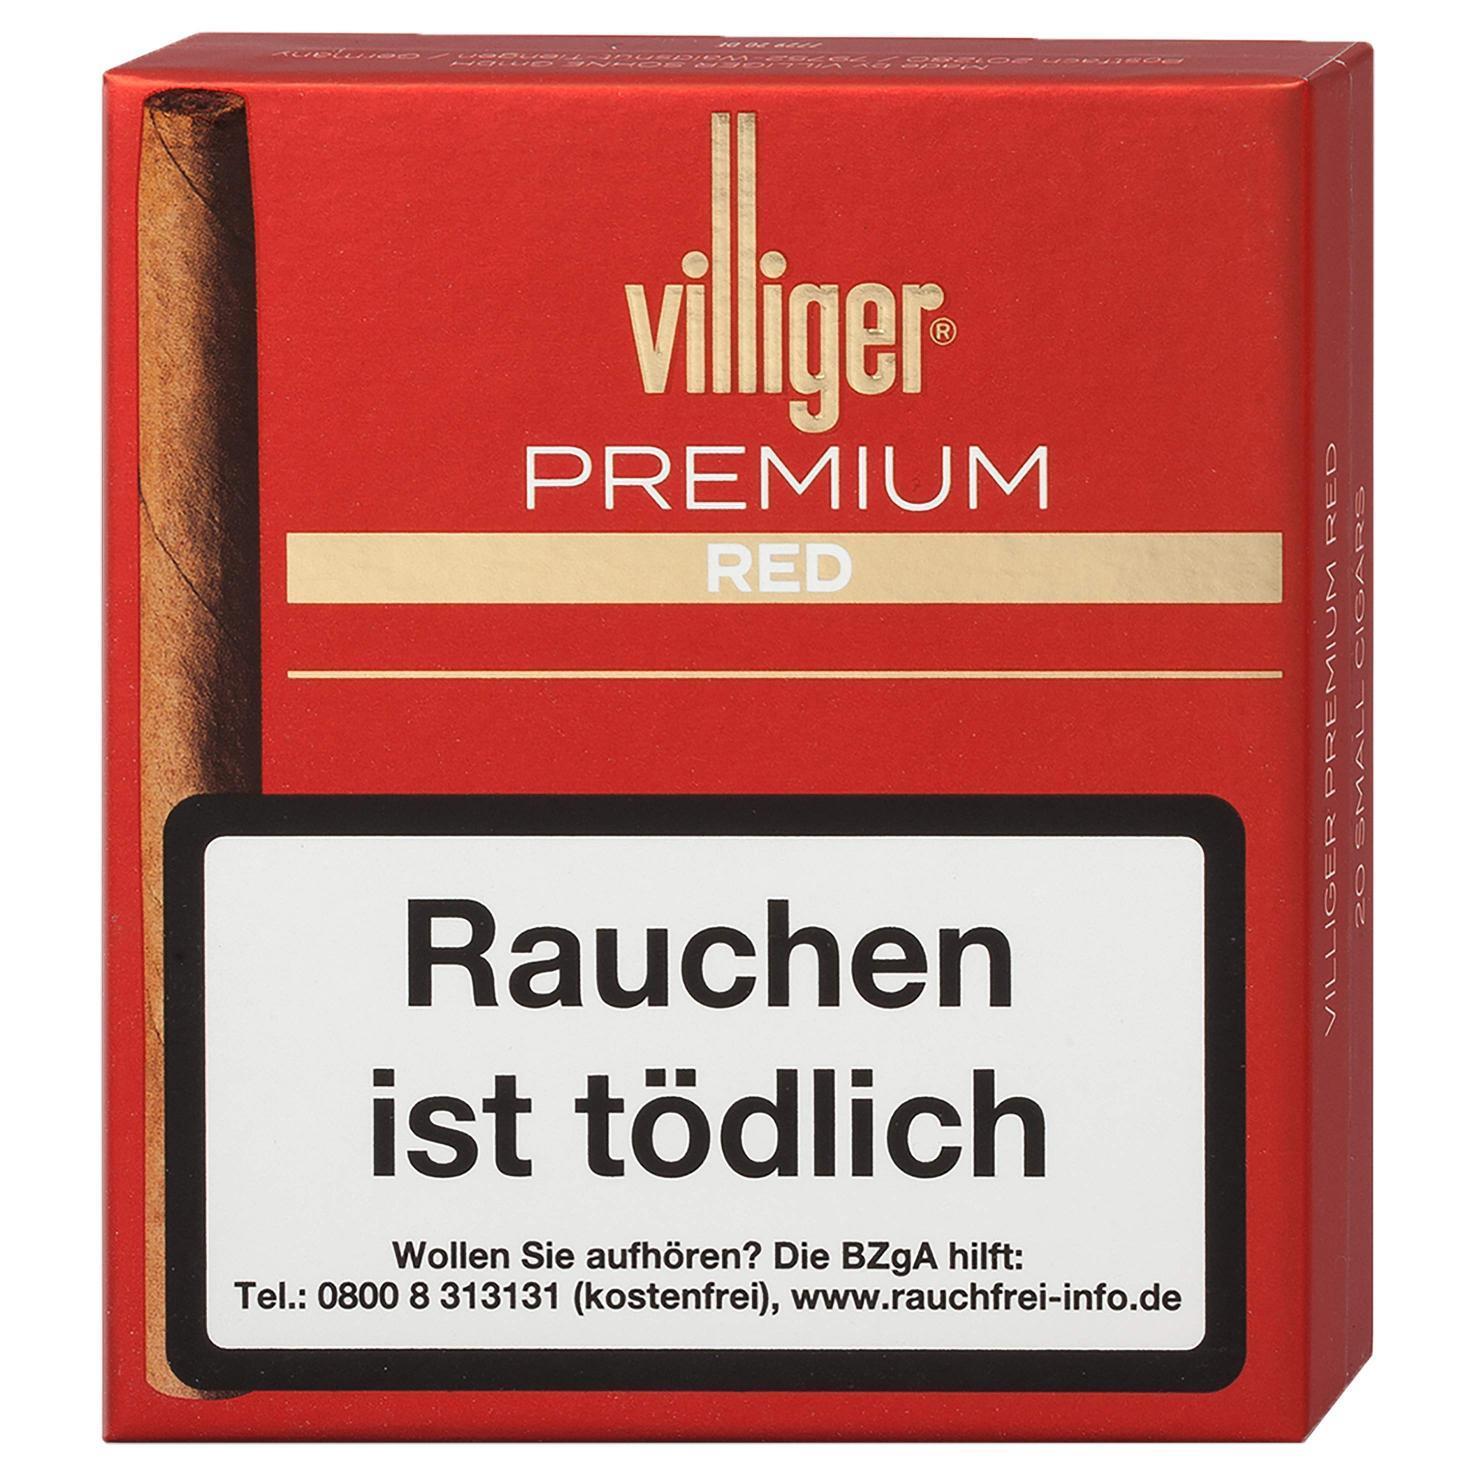 Villiger Premium Red 5 x 20 Zigarillos 20St